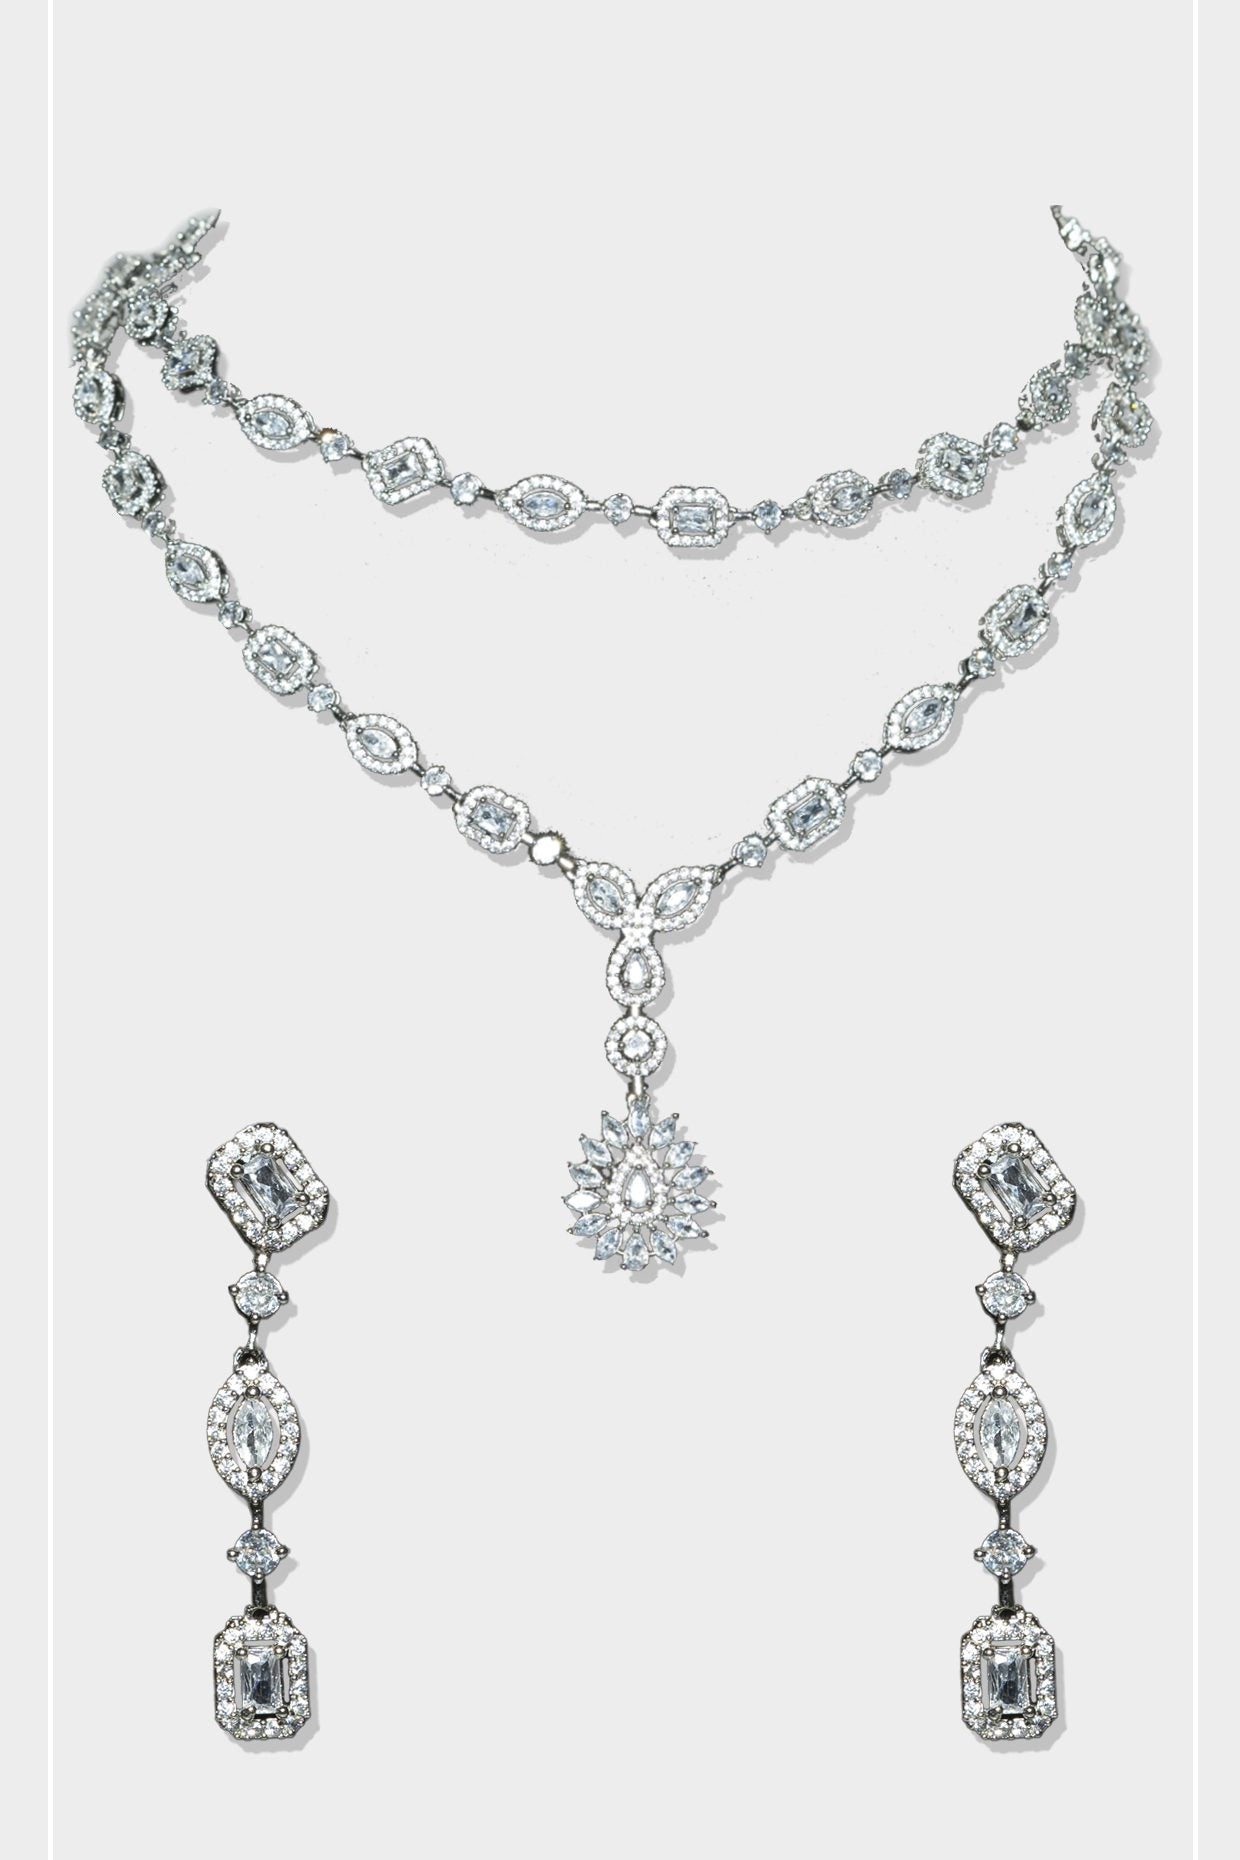 Stunning Rhodium Finish Diamonte Necklace Set